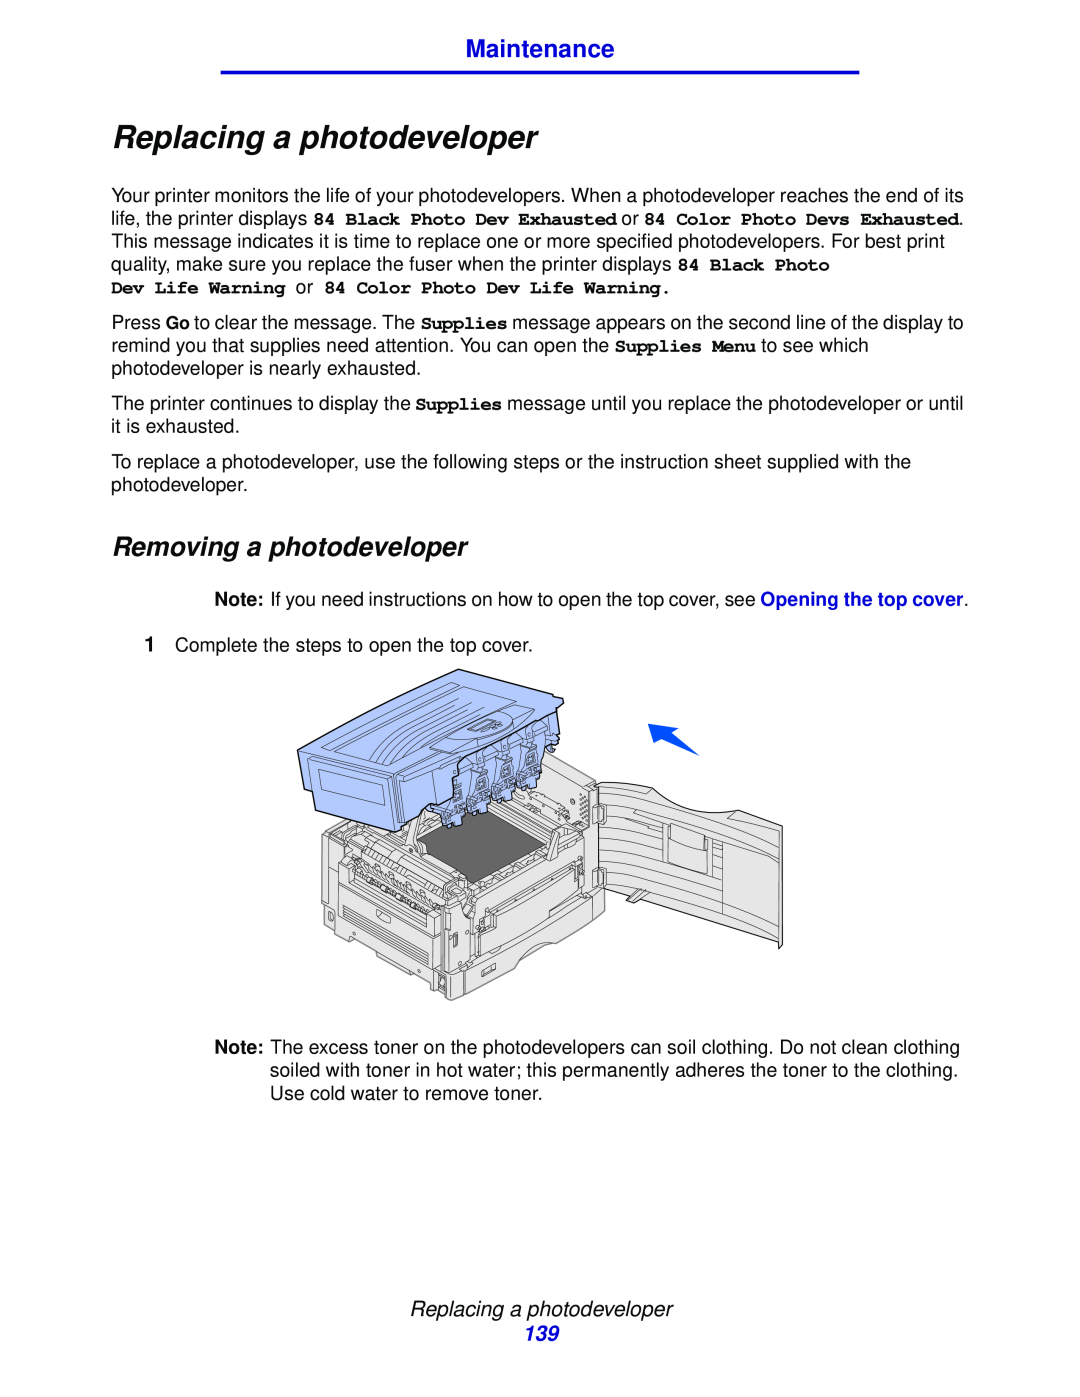 Lexmark 912 manual Replacing a photodeveloper, Removing a photodeveloper, Maintenance 